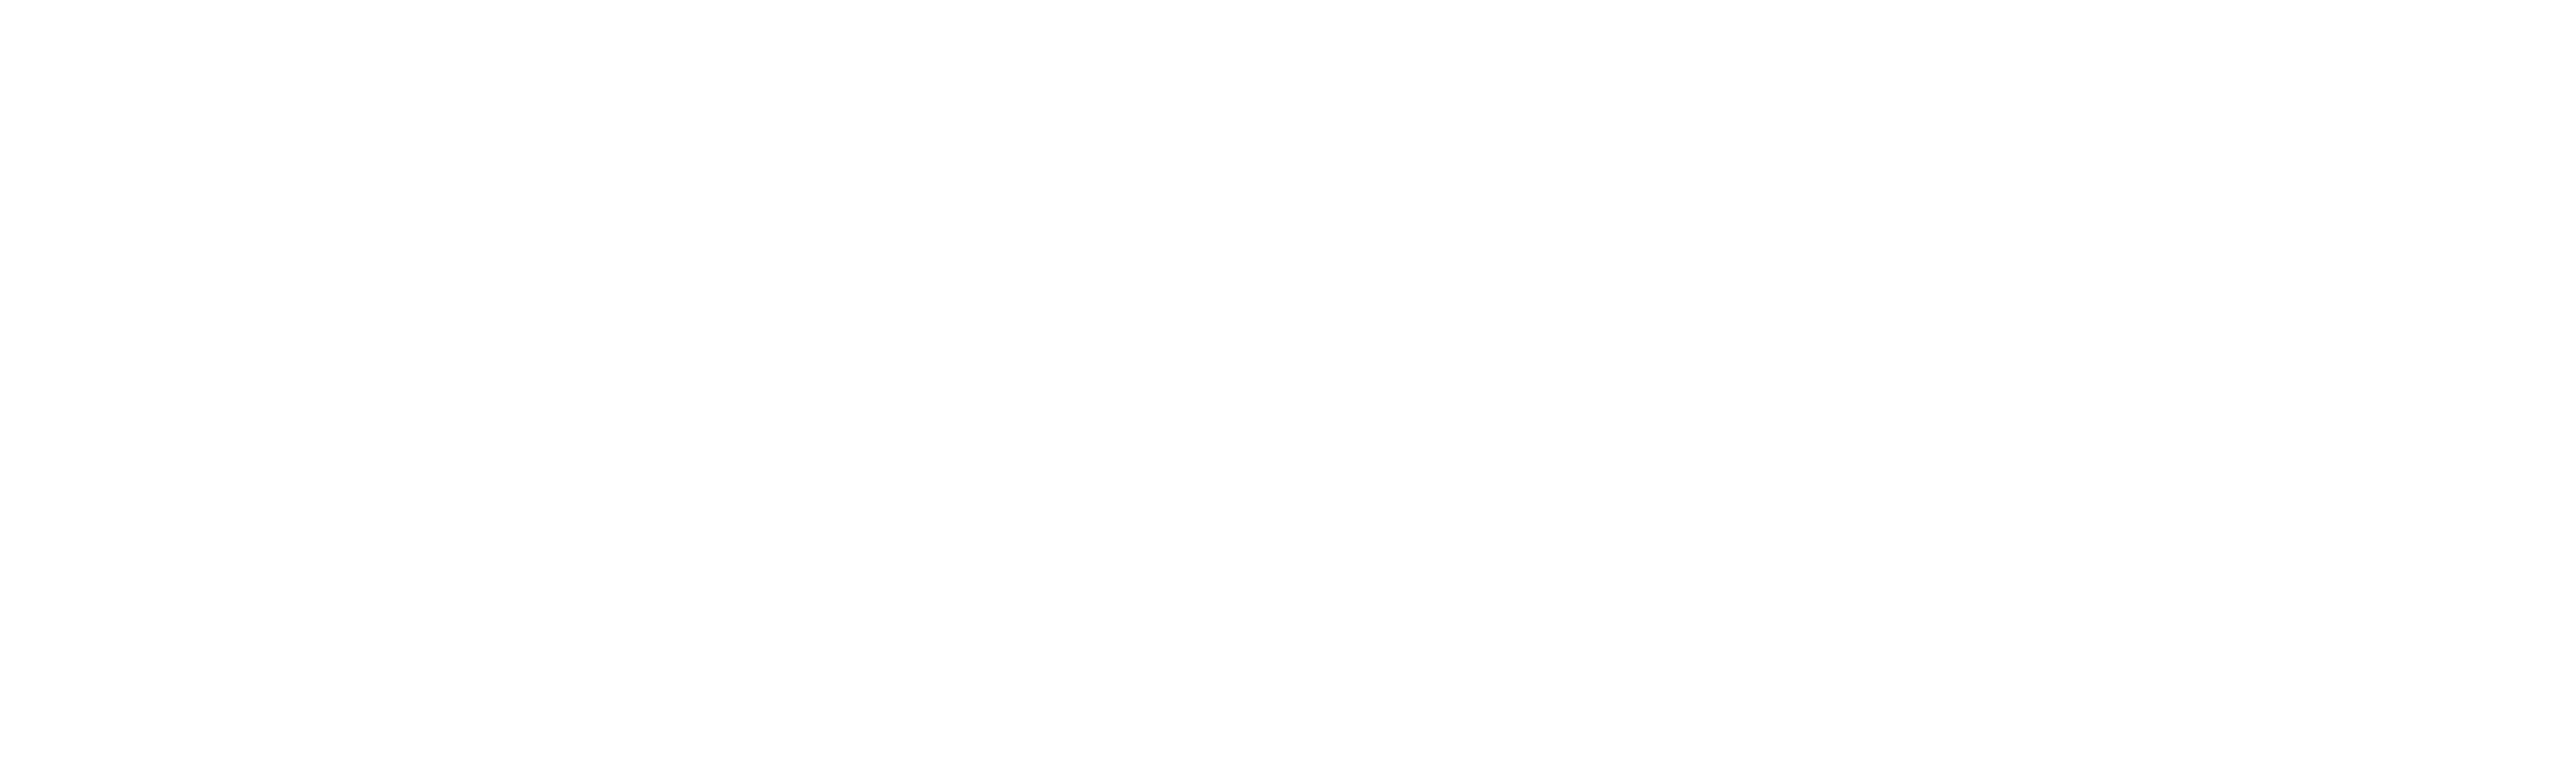 Png Fil Vordingborg Logo Neg